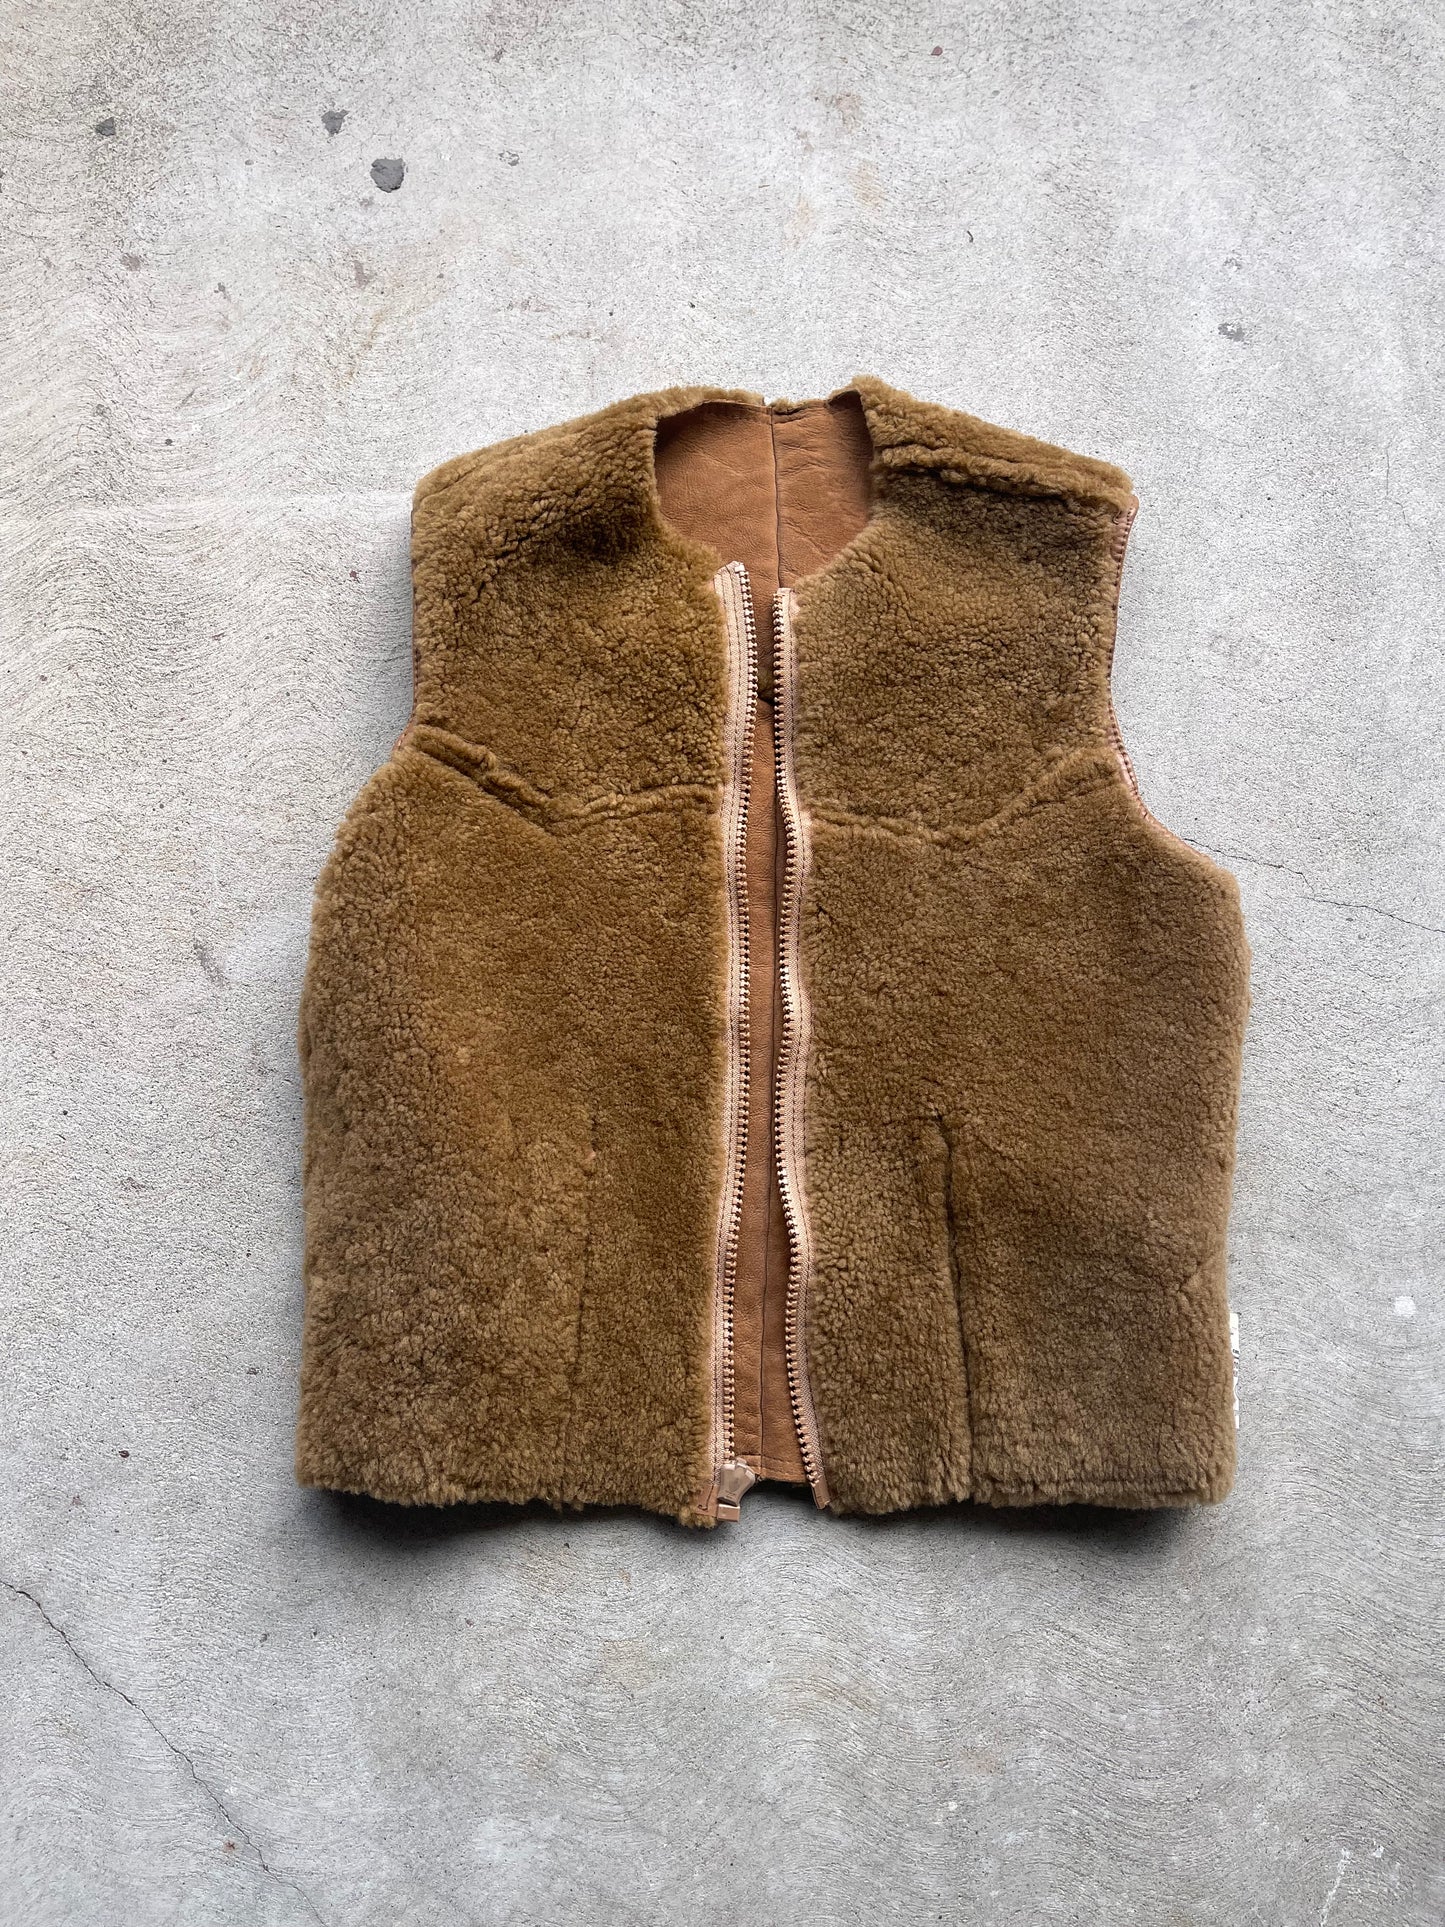 Vintage Sheepskin Vest in Tan - XS/S